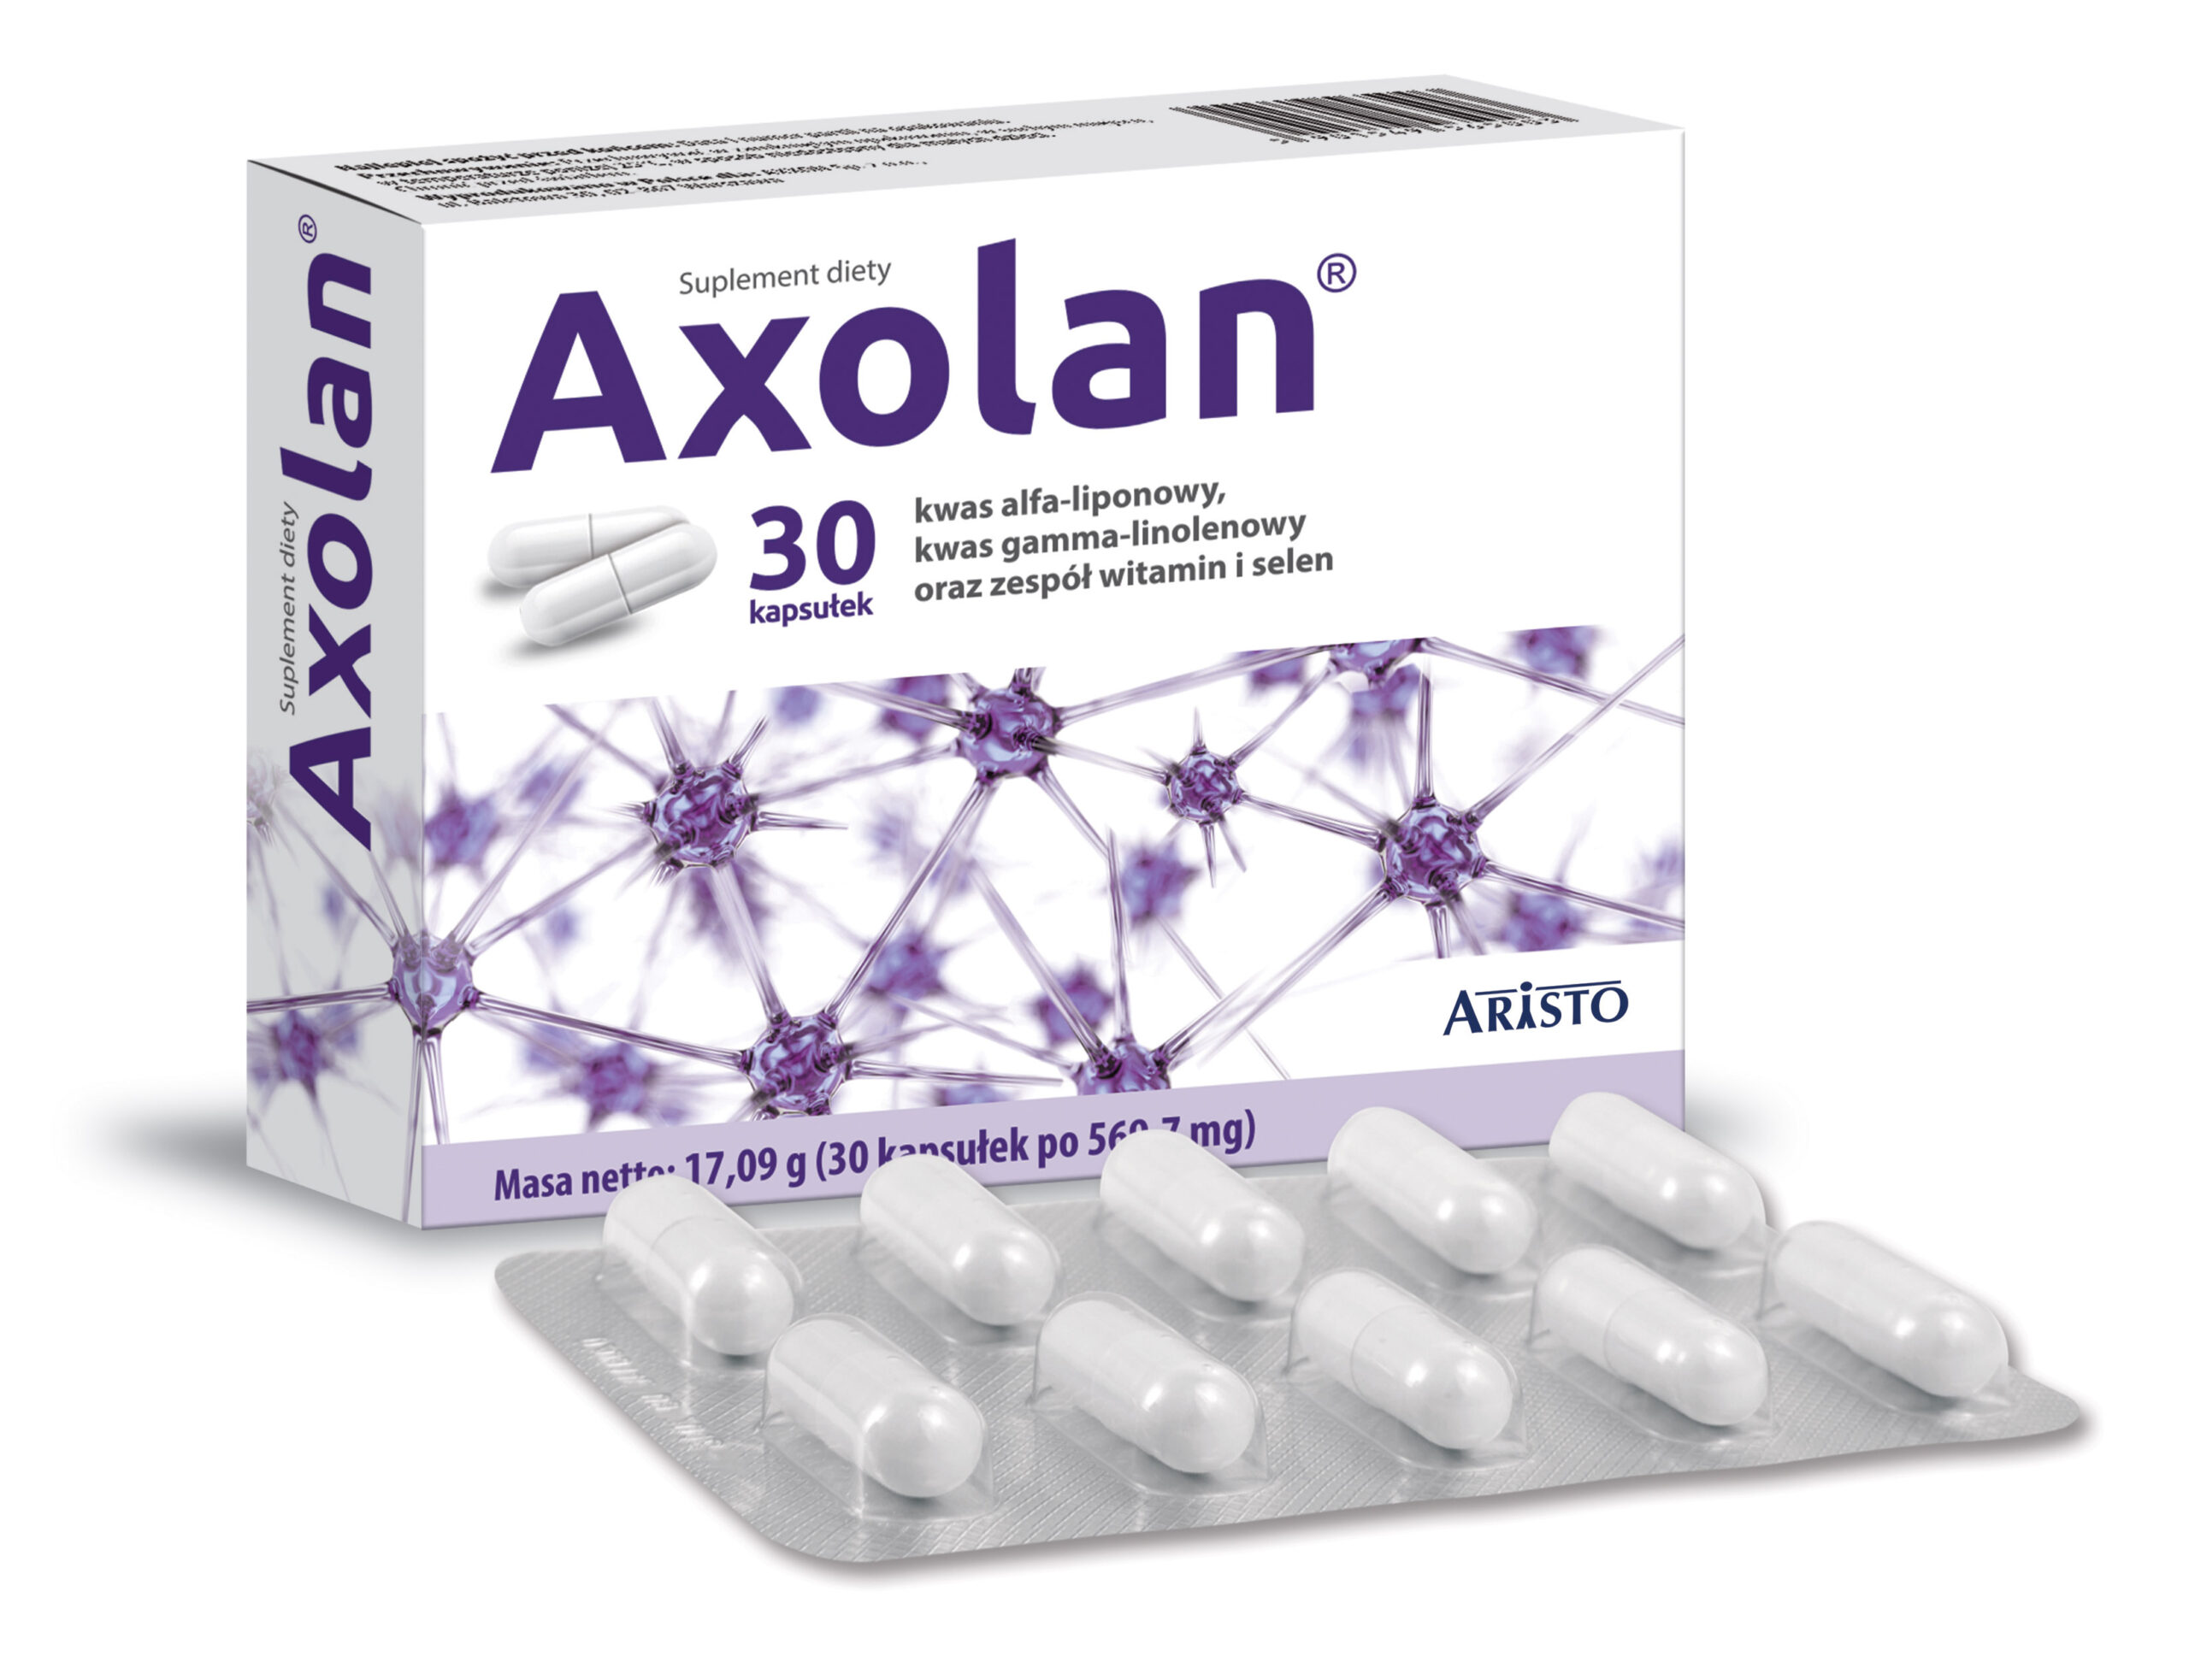 http://farmaceuta.info/wp-content/uploads/2022/08/Axolan_box_blister_Aristo-scaled.jpg